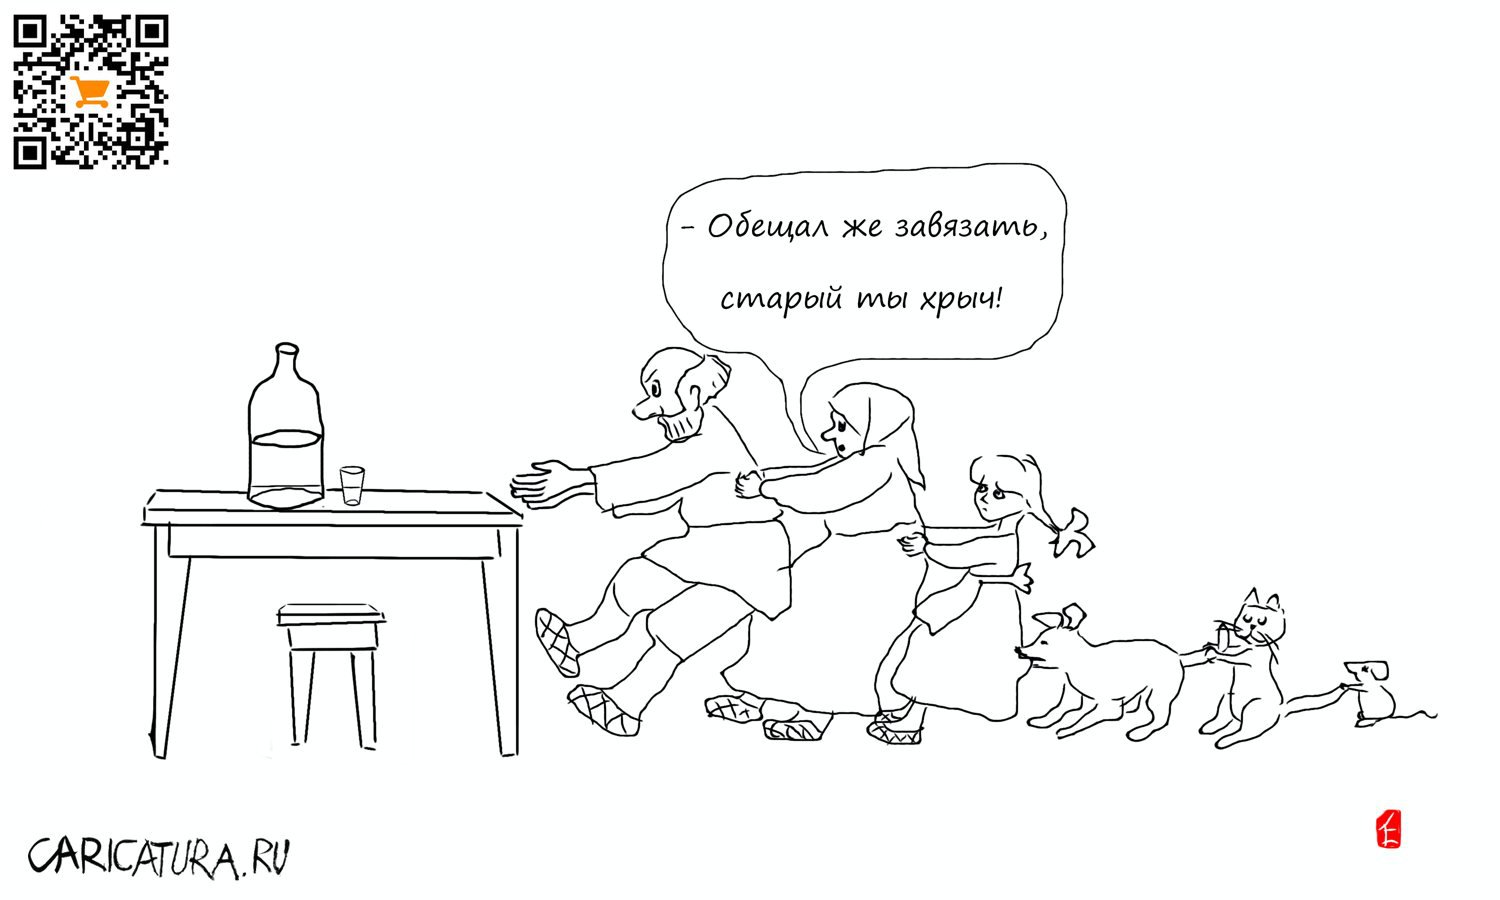 Карикатура "Репка", Евгений Лапин